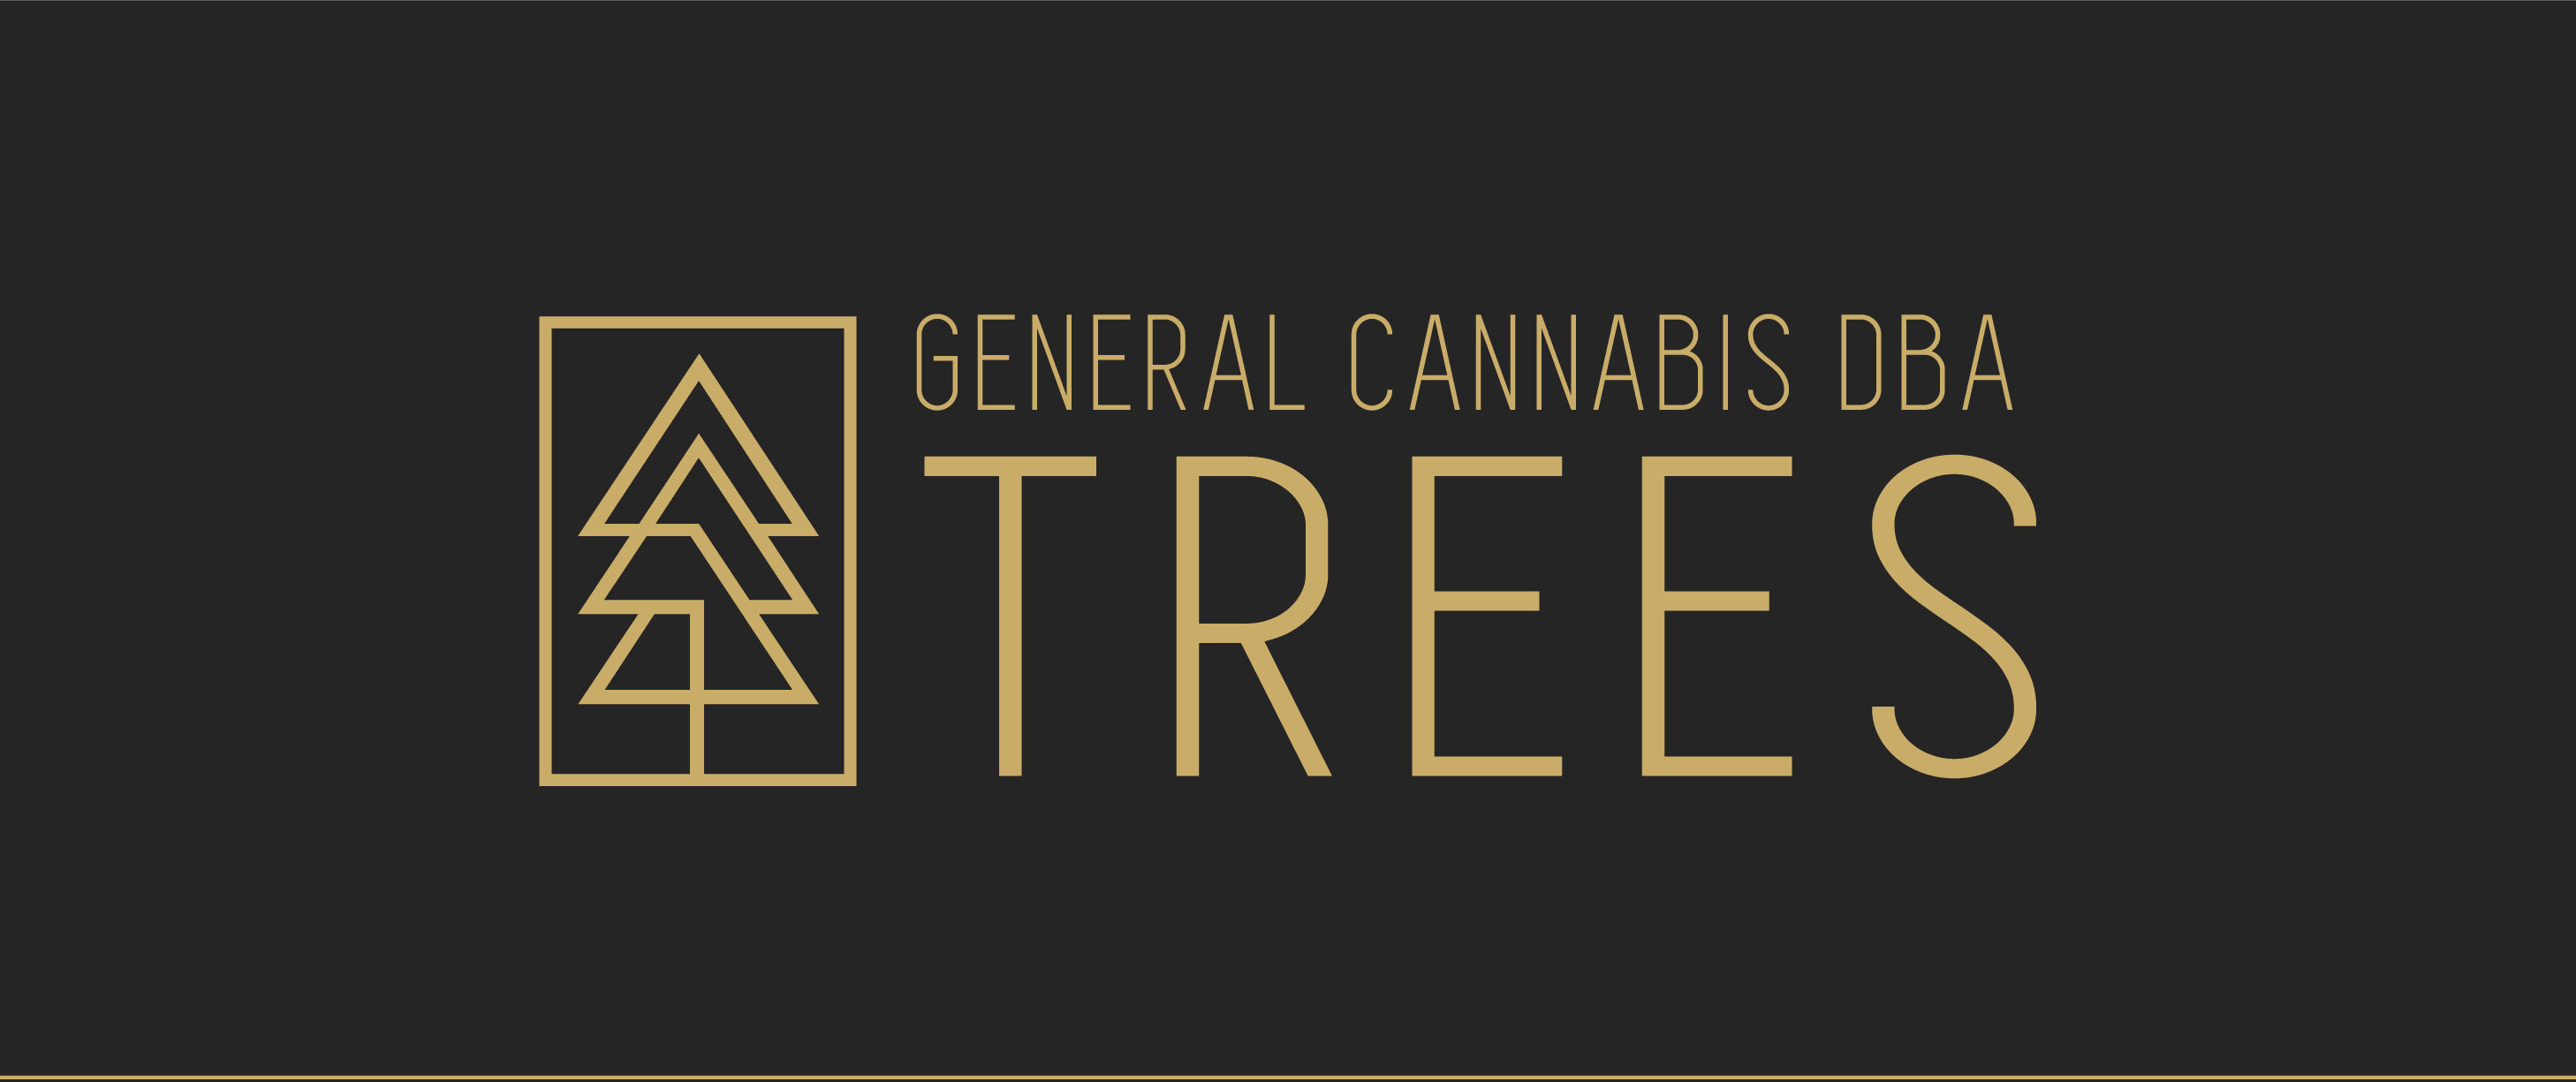 Trees Logo - Correct.png